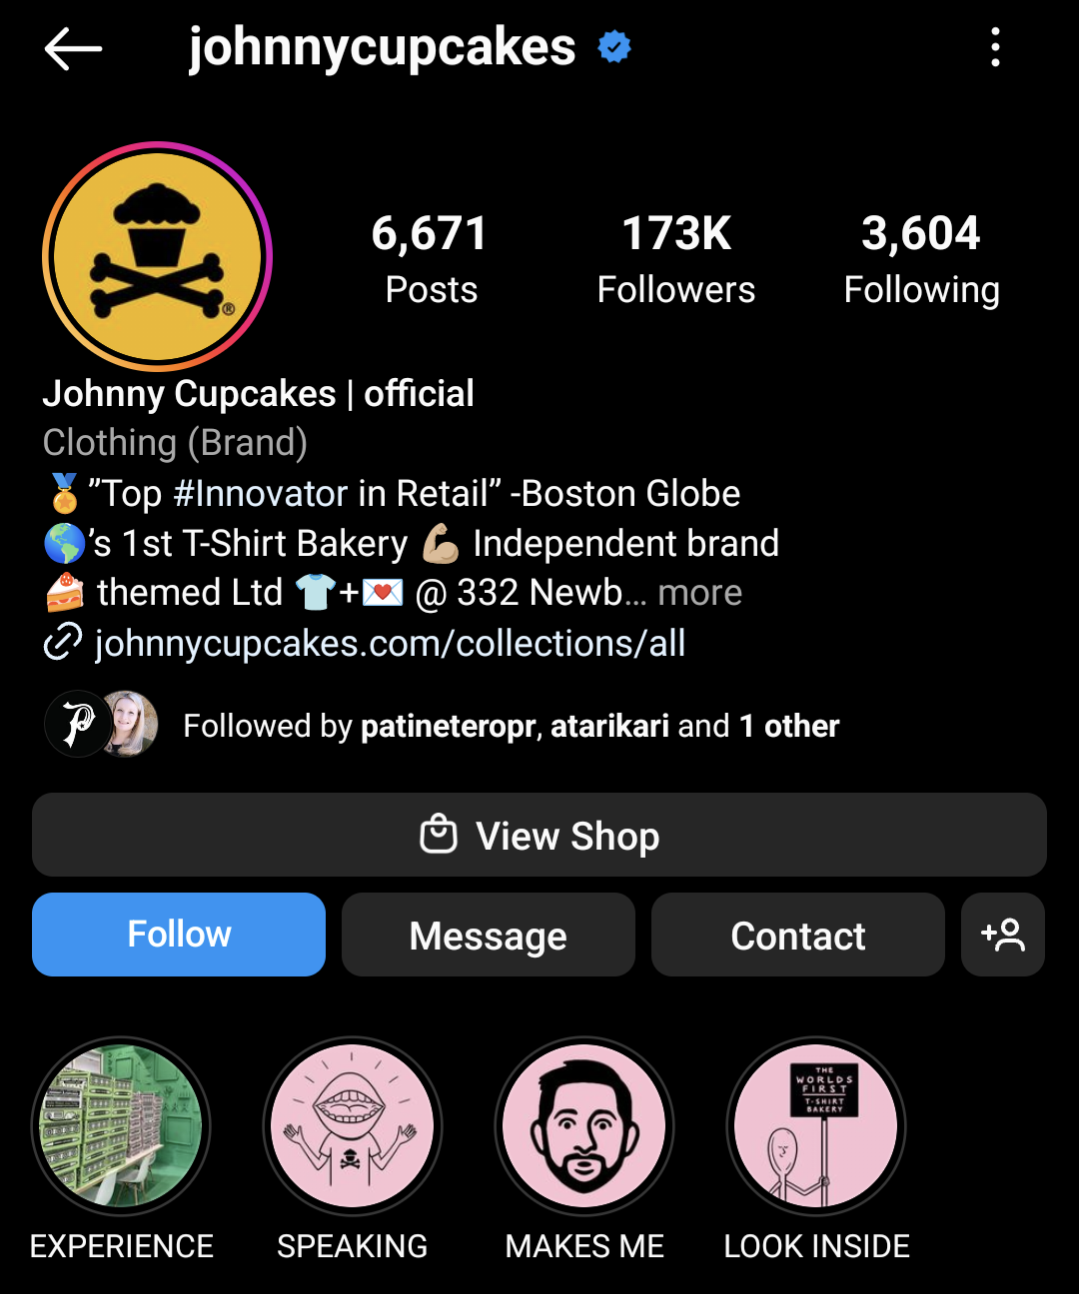 Johnny Cupcakes Instagram bio featuring social proof